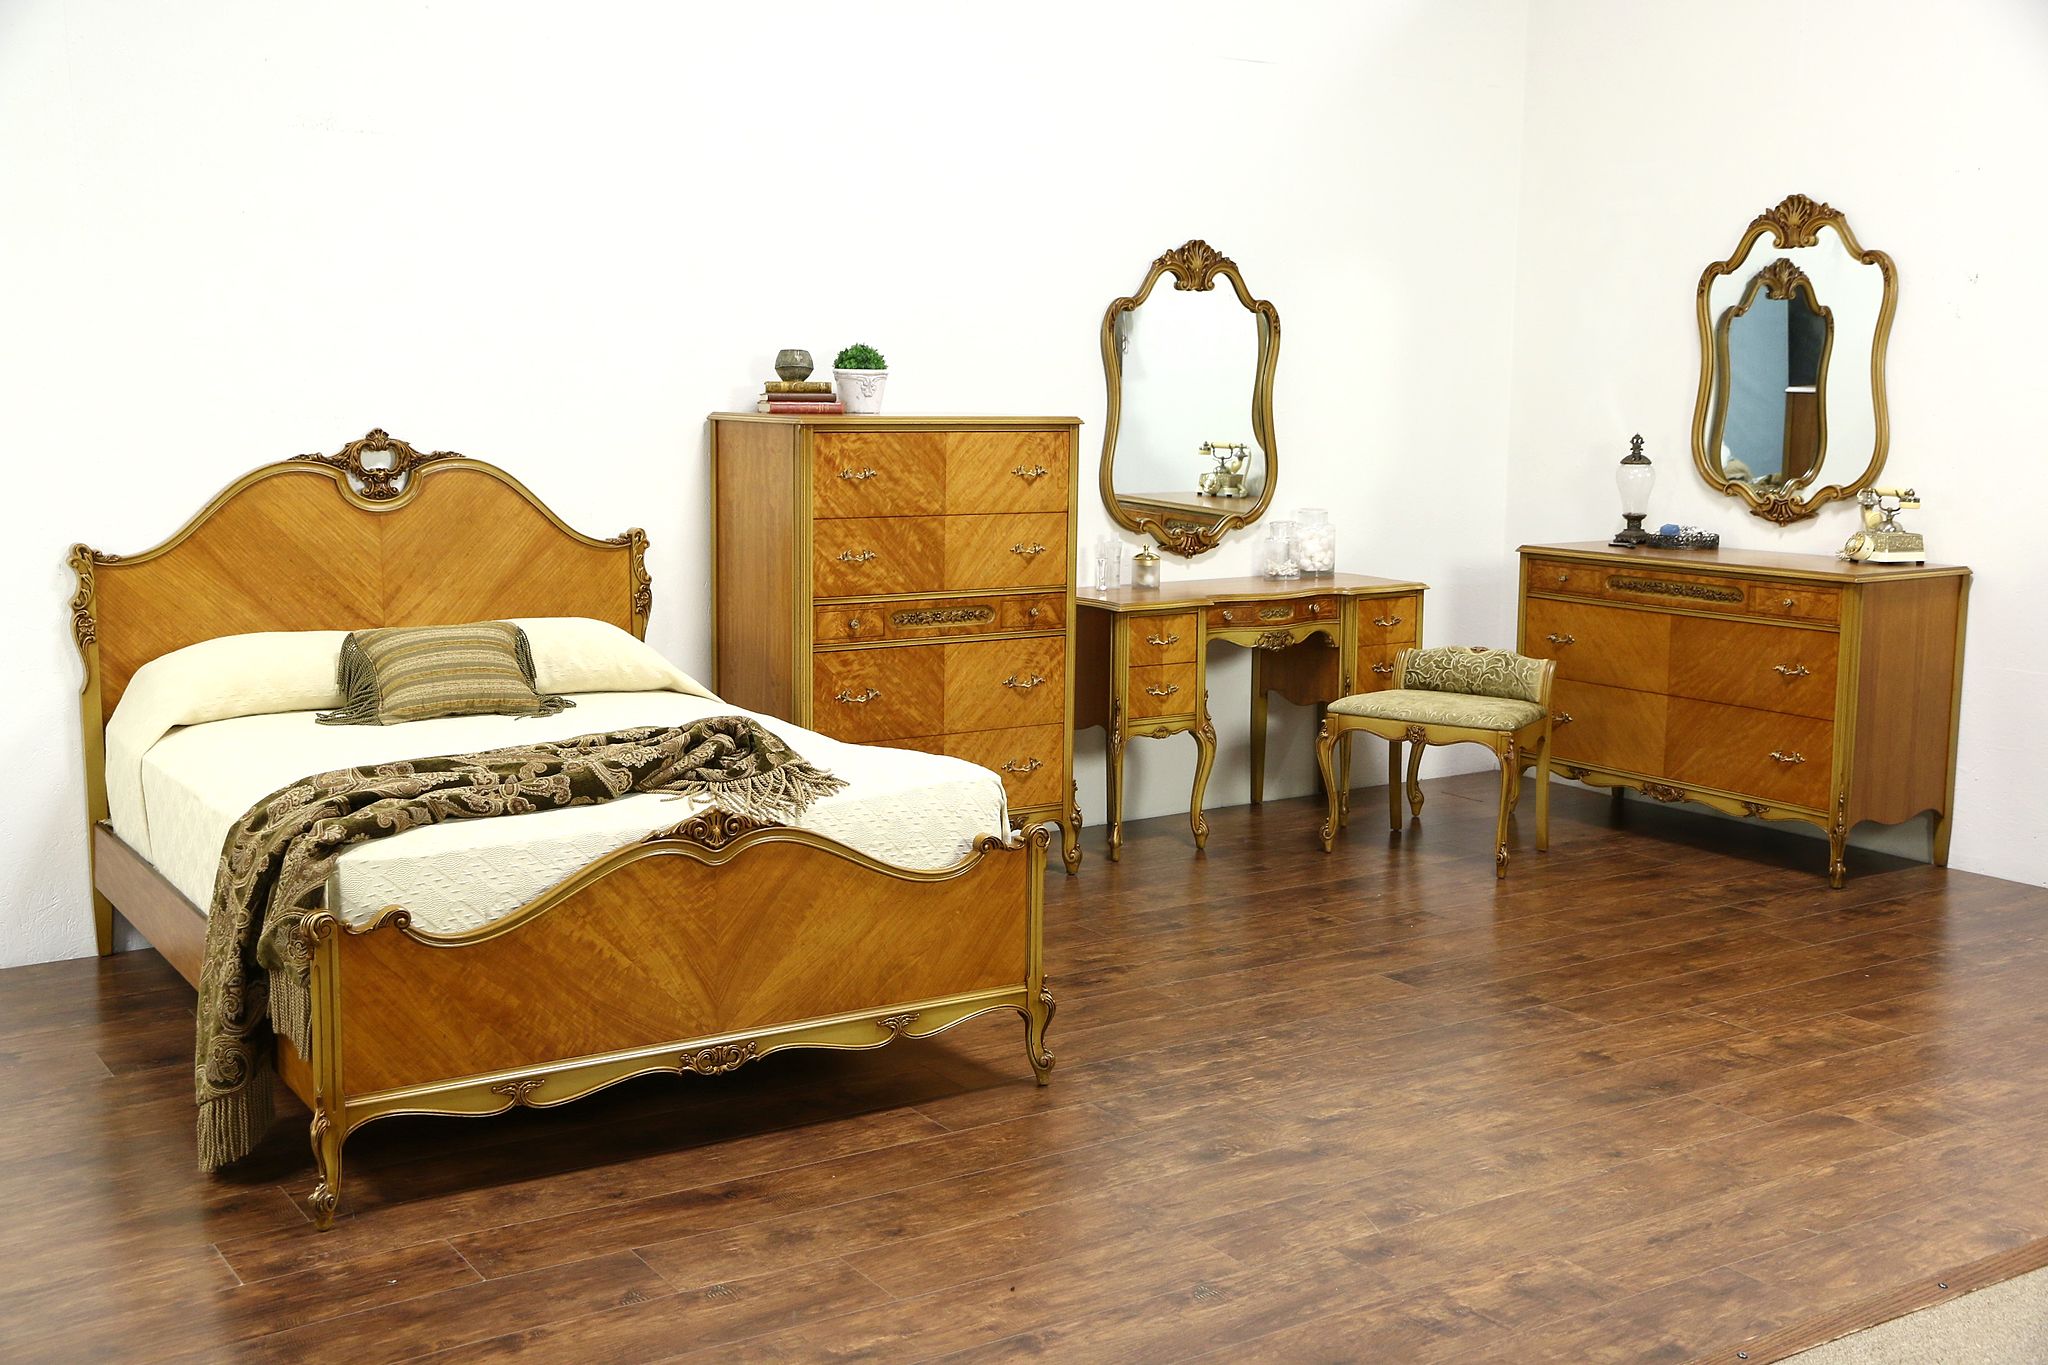 1940s bedroom furniture styles